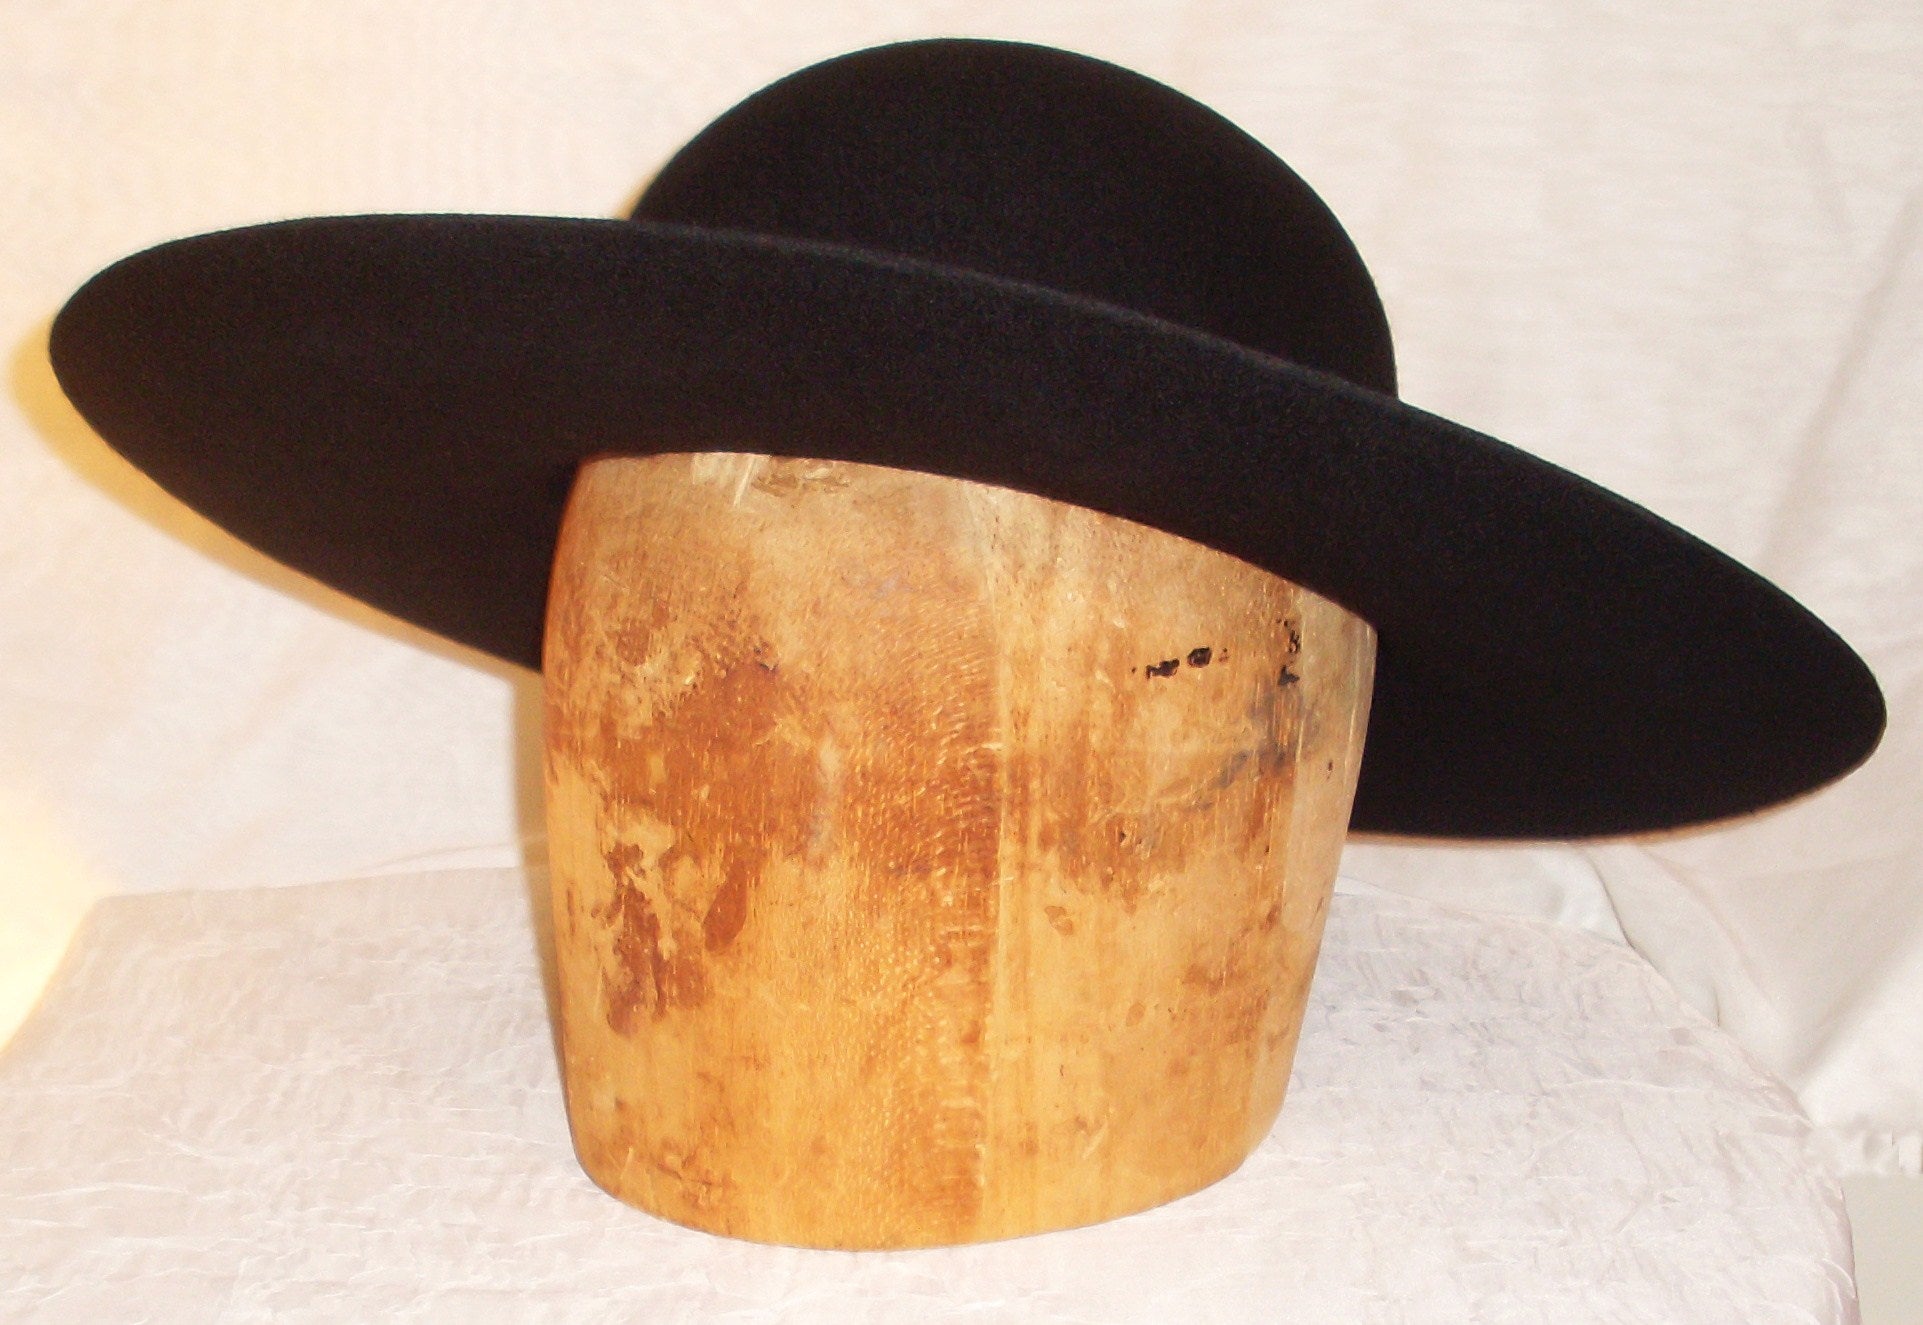 Black Cavalier Hat Black Pirate Hat Black and Burgundy 